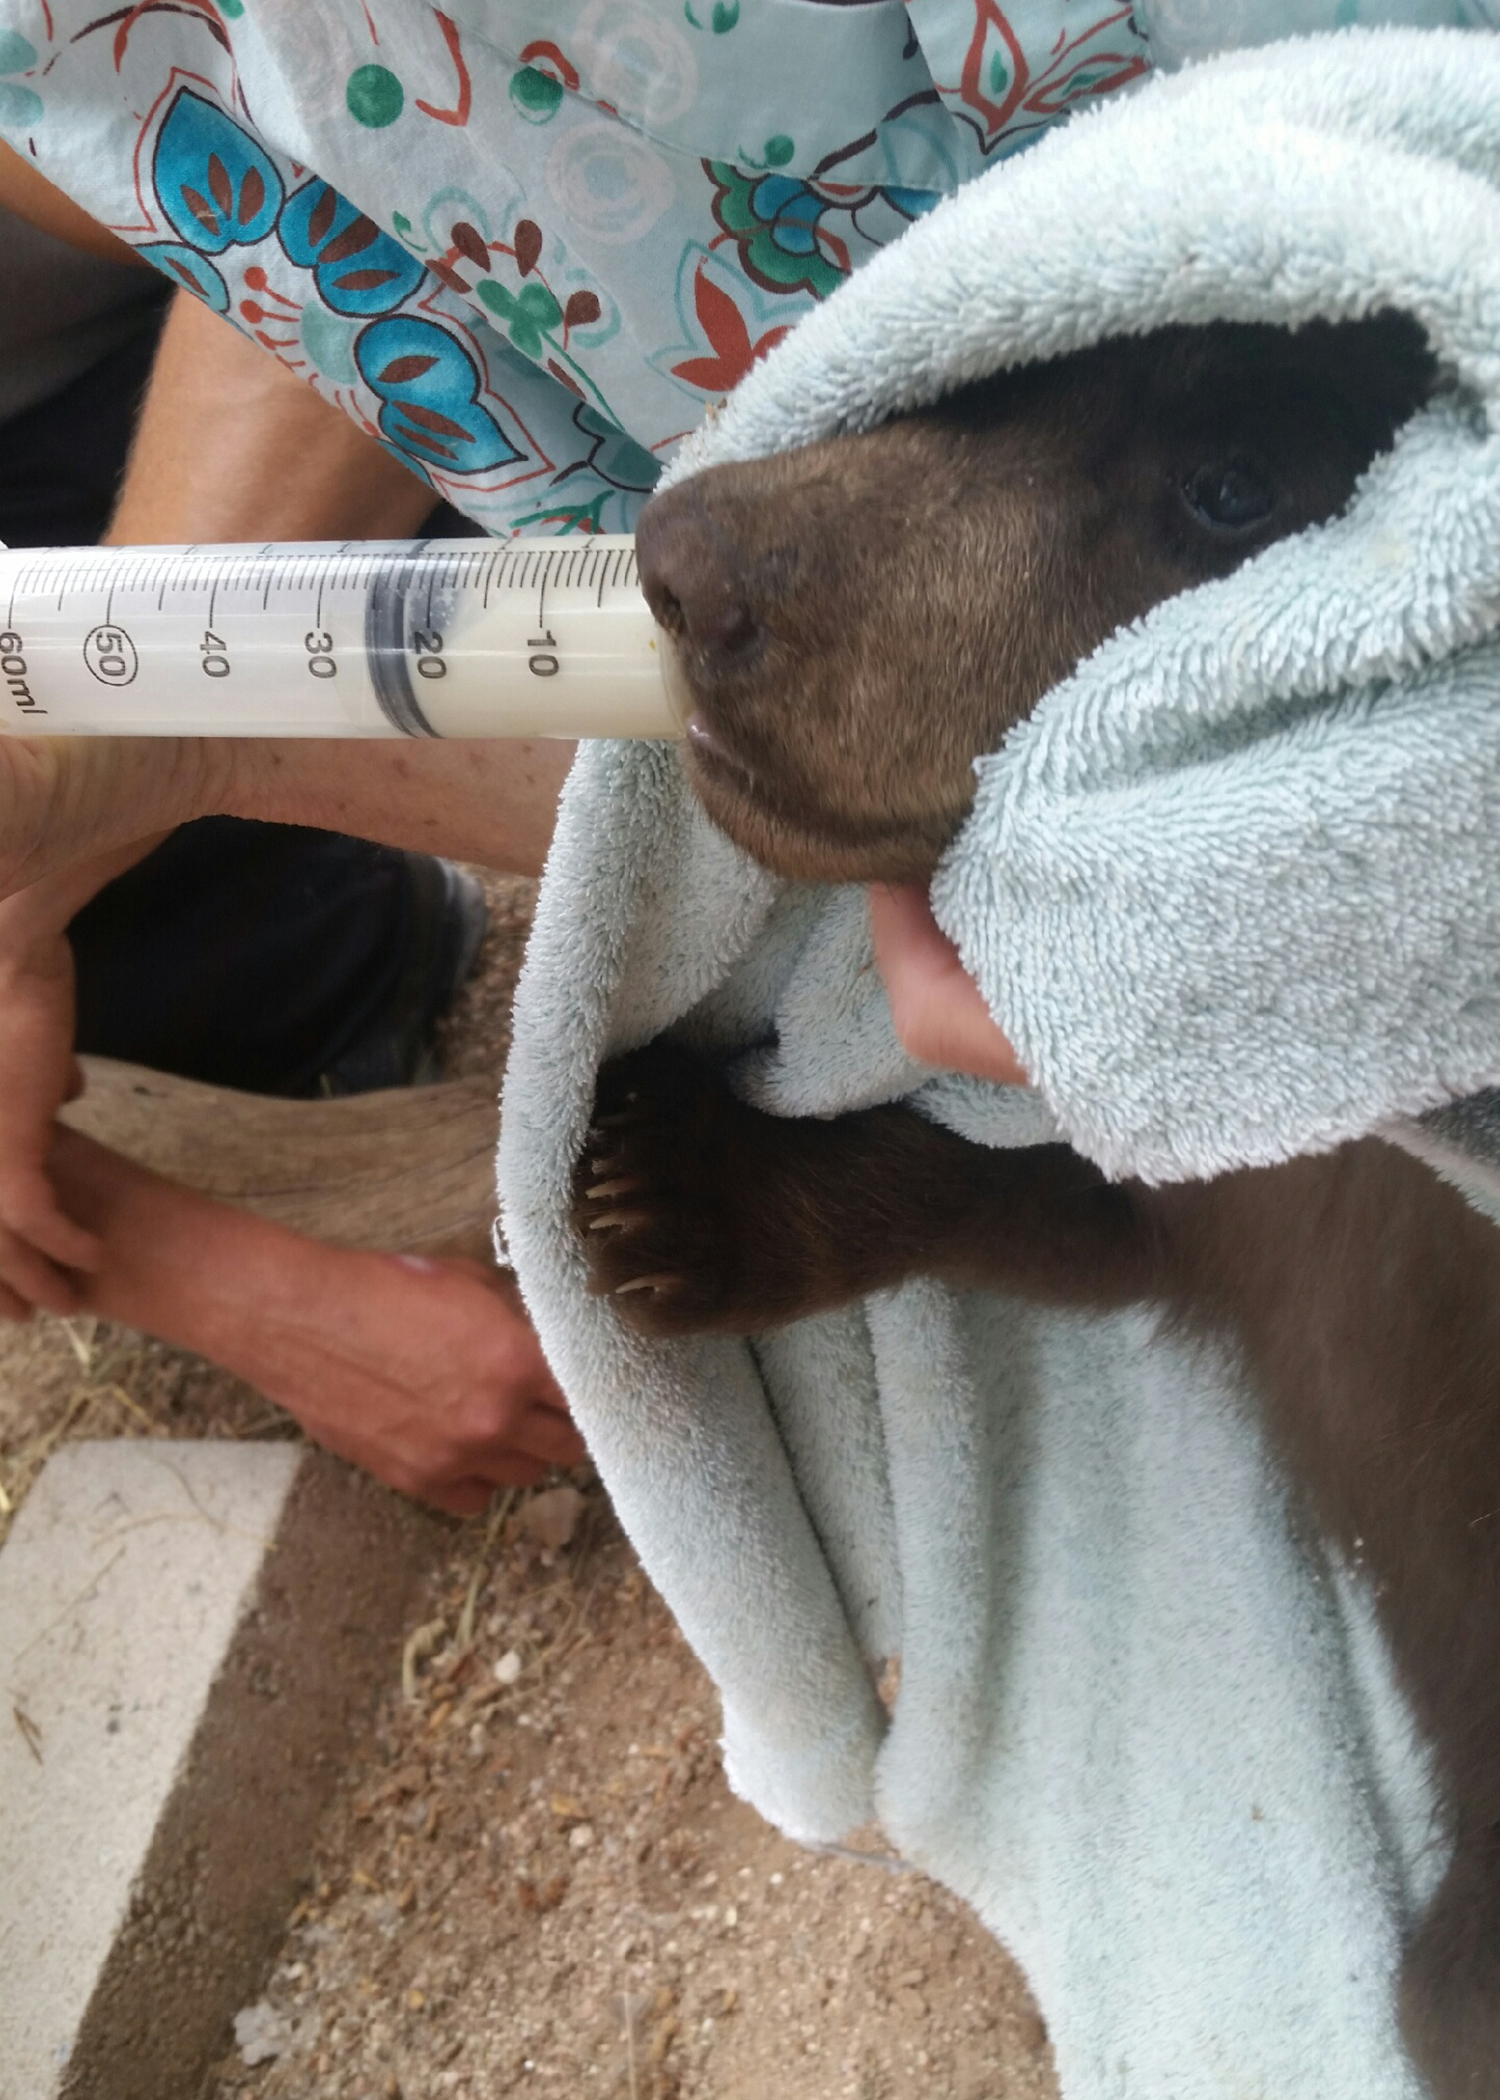 Black bear cub nursing from bottle held by rescue worker. Source: NMDGF